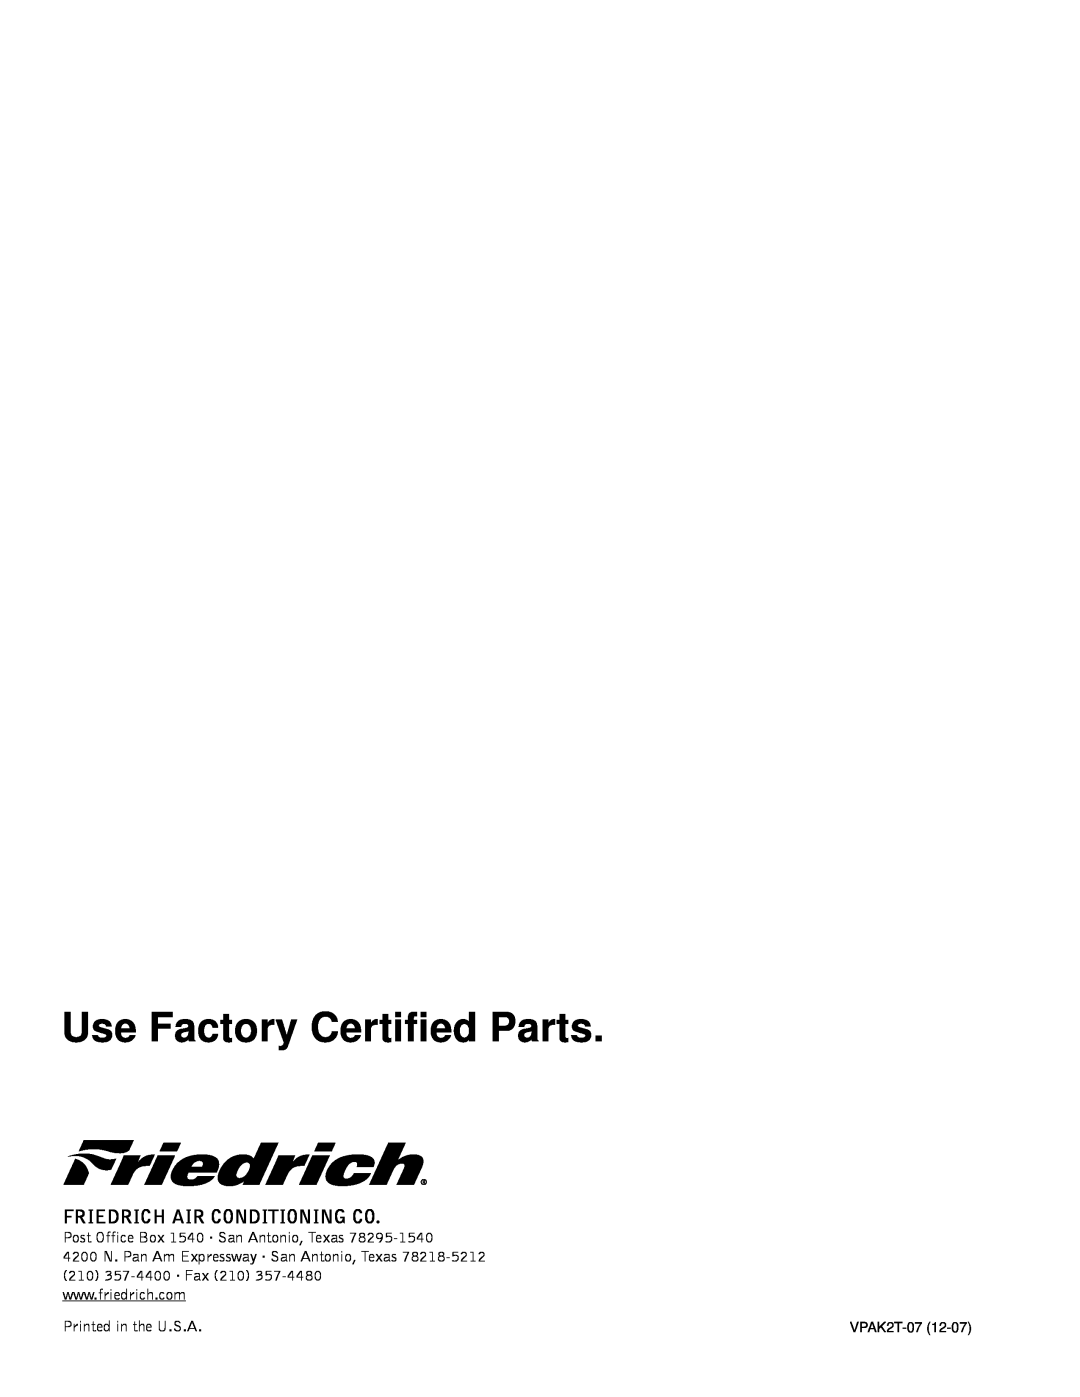 Friedrich A Series / 24, 000 BTU/h manual Use Factory Certiﬁed Parts, Friedrich Air Conditioning Co, VPAK2T-07 